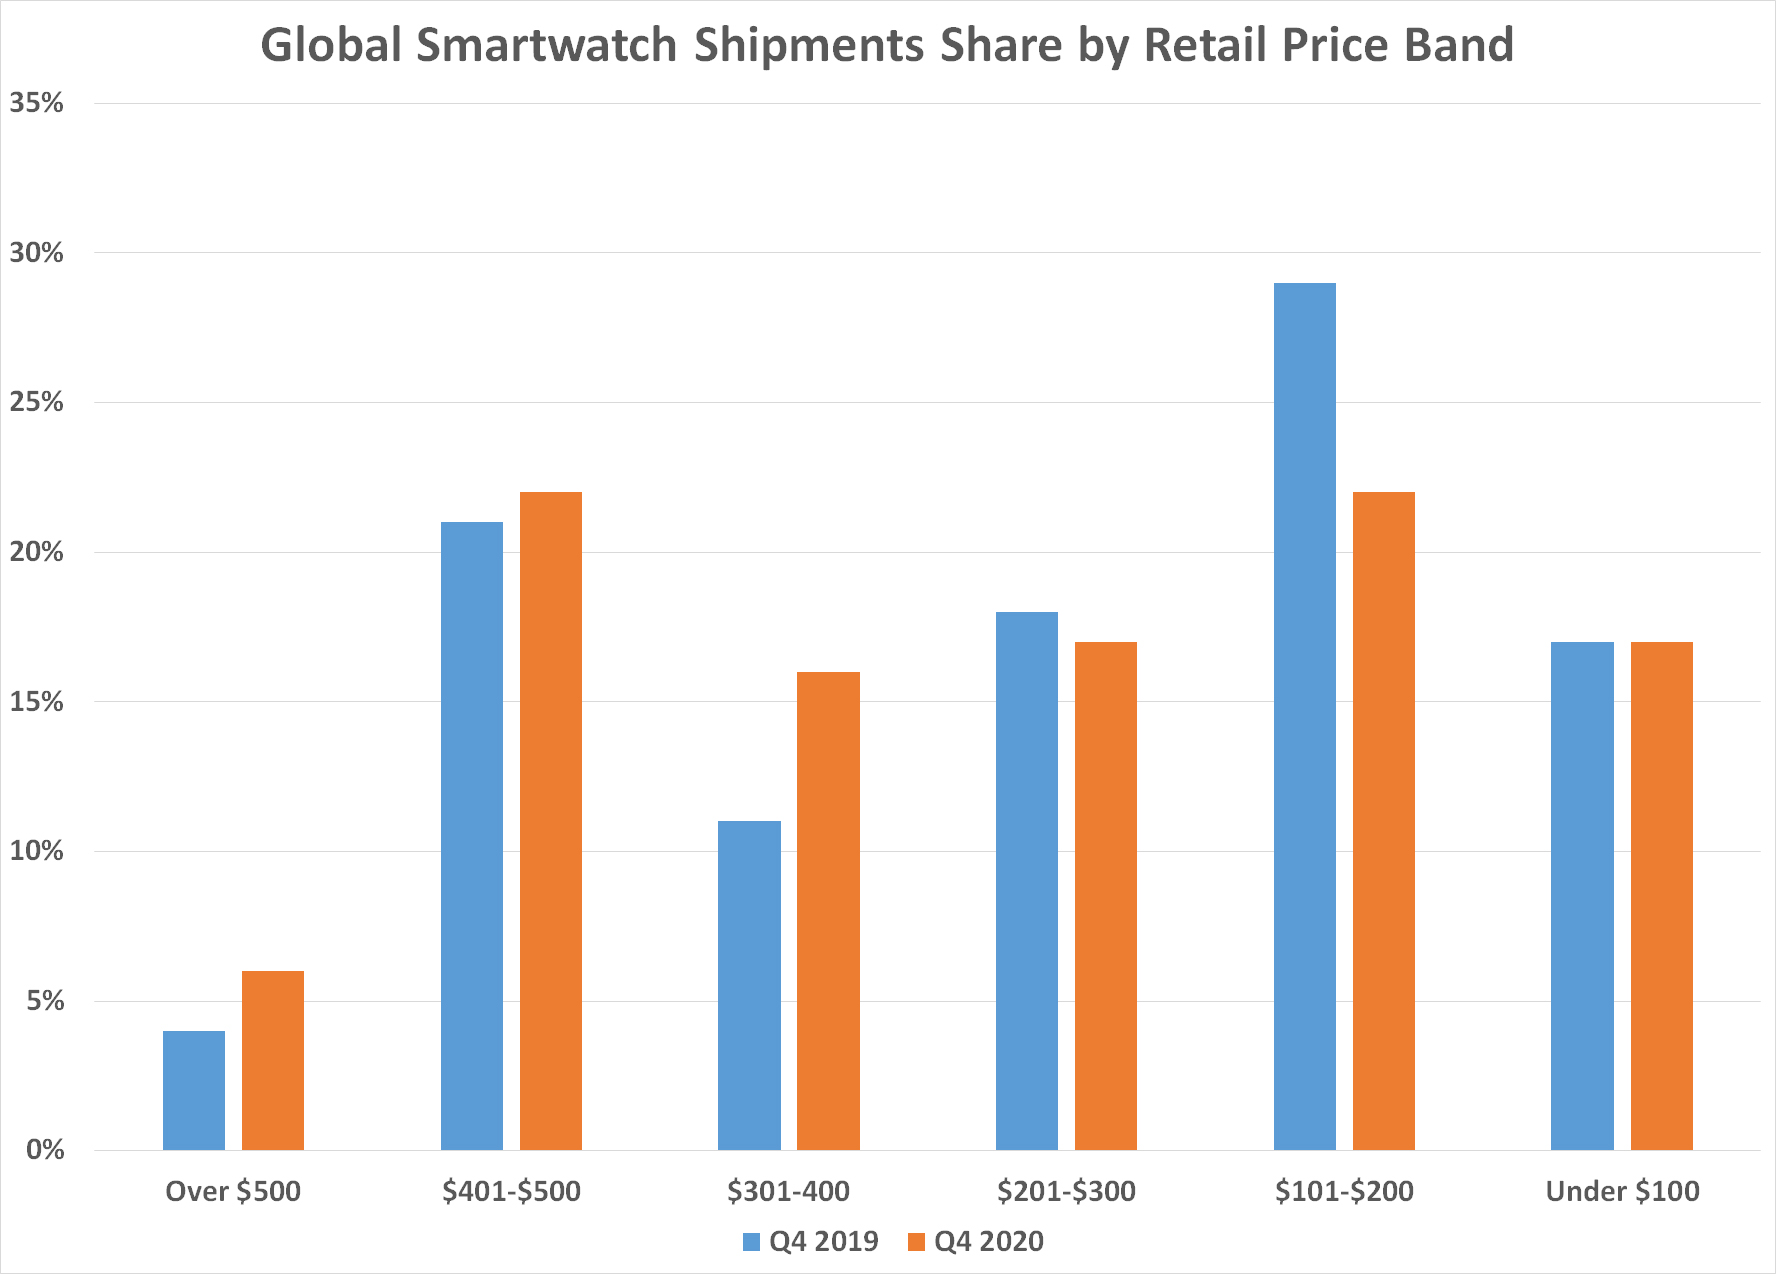 Smartwatch shipments